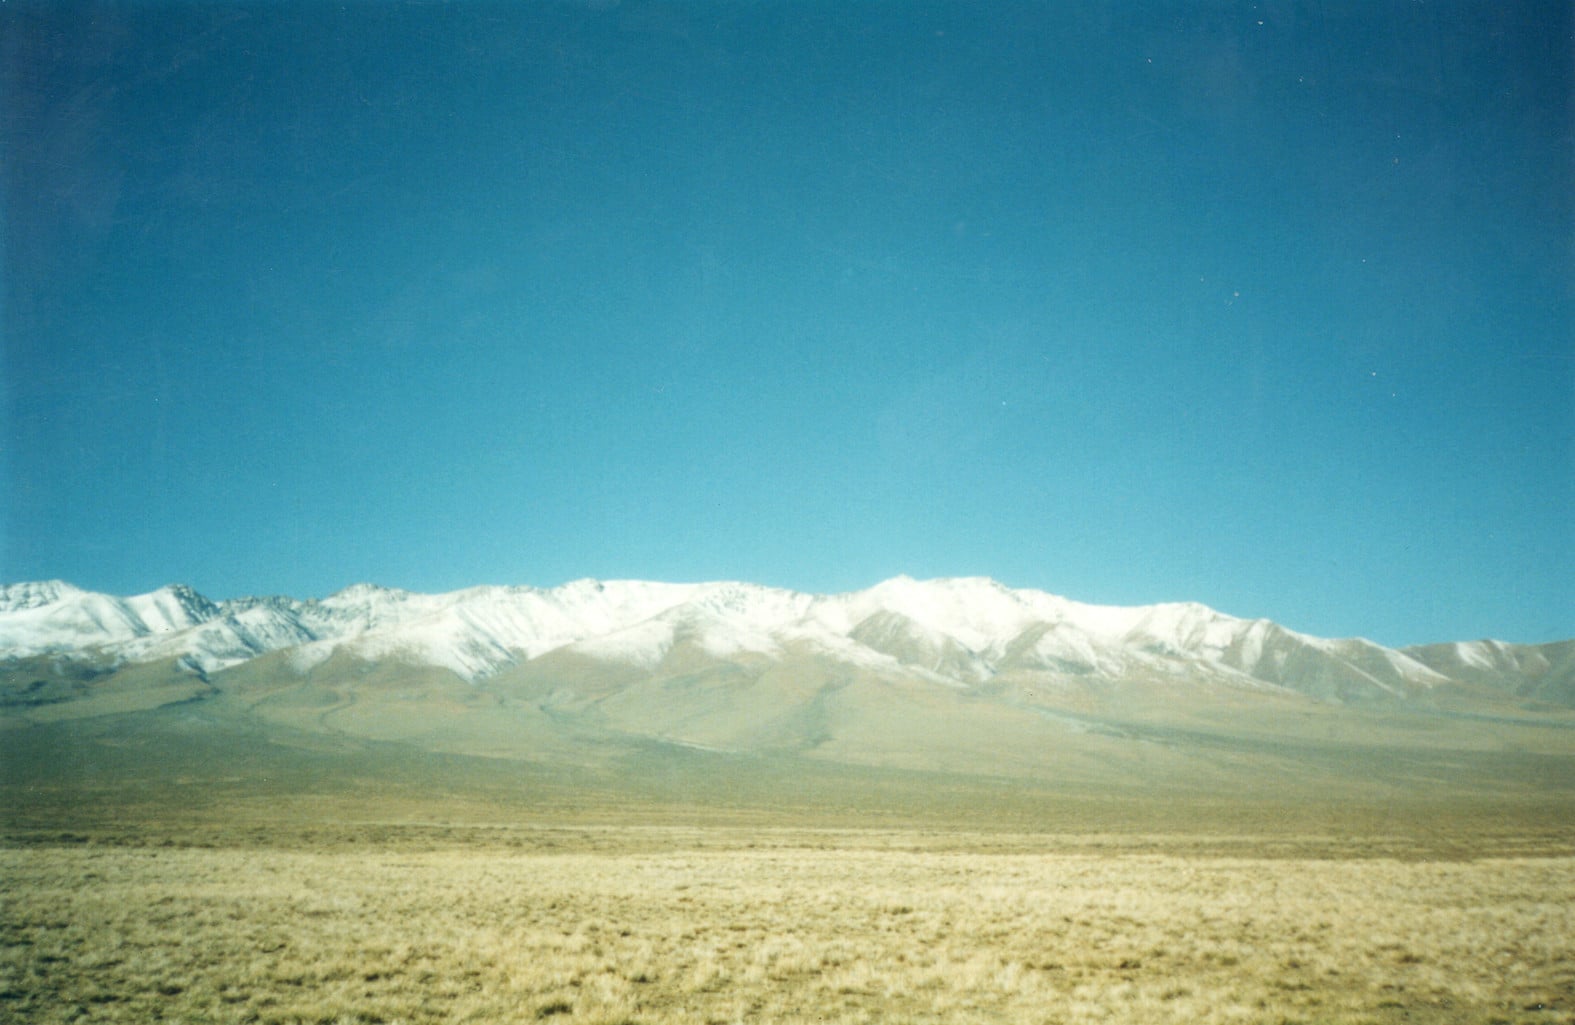 Jargalant Altai from Tserendavaa's Gers Mongolia 1993